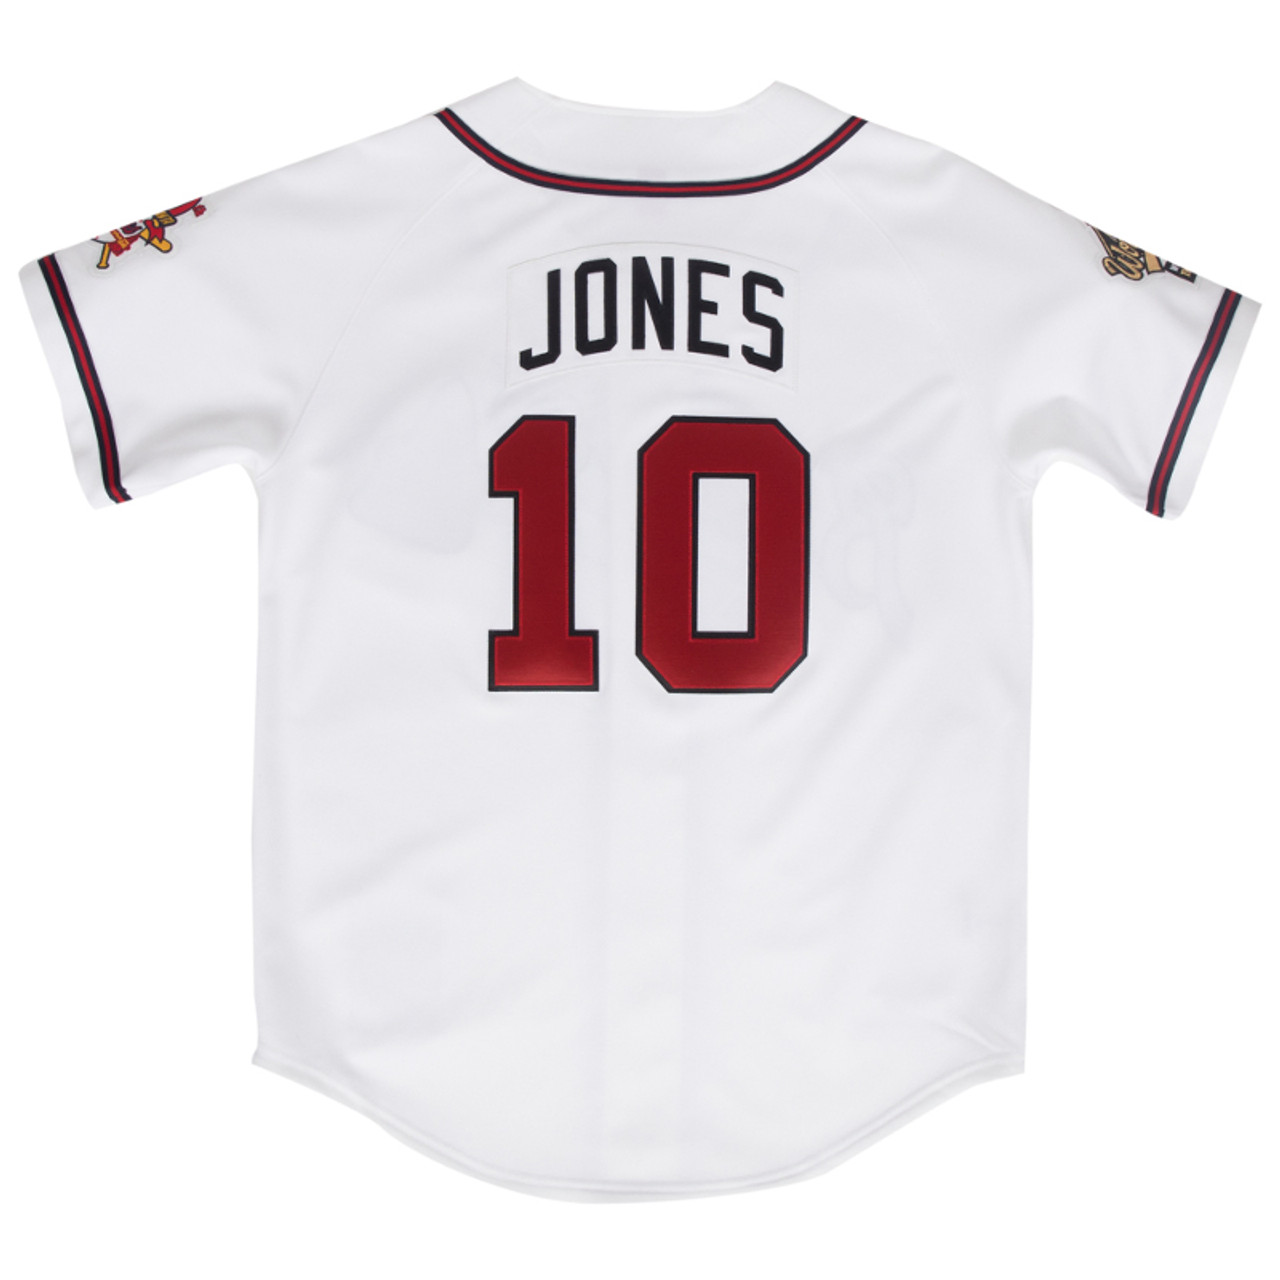 Jimmy Jones replica jersey